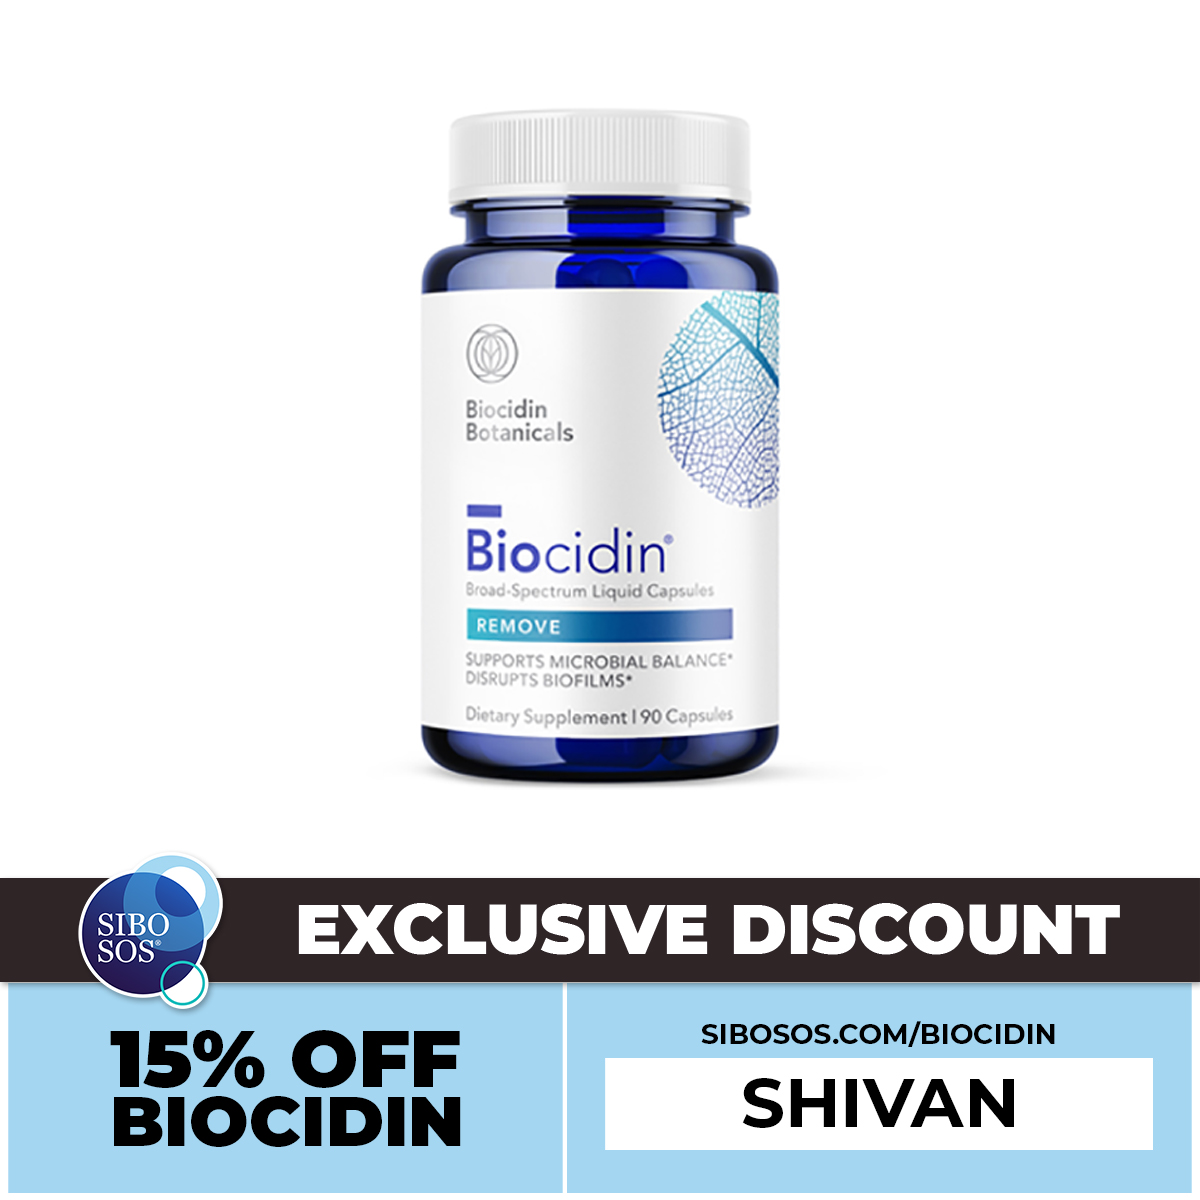 Get 15% off on Biocidin from Biocidin Botanicals